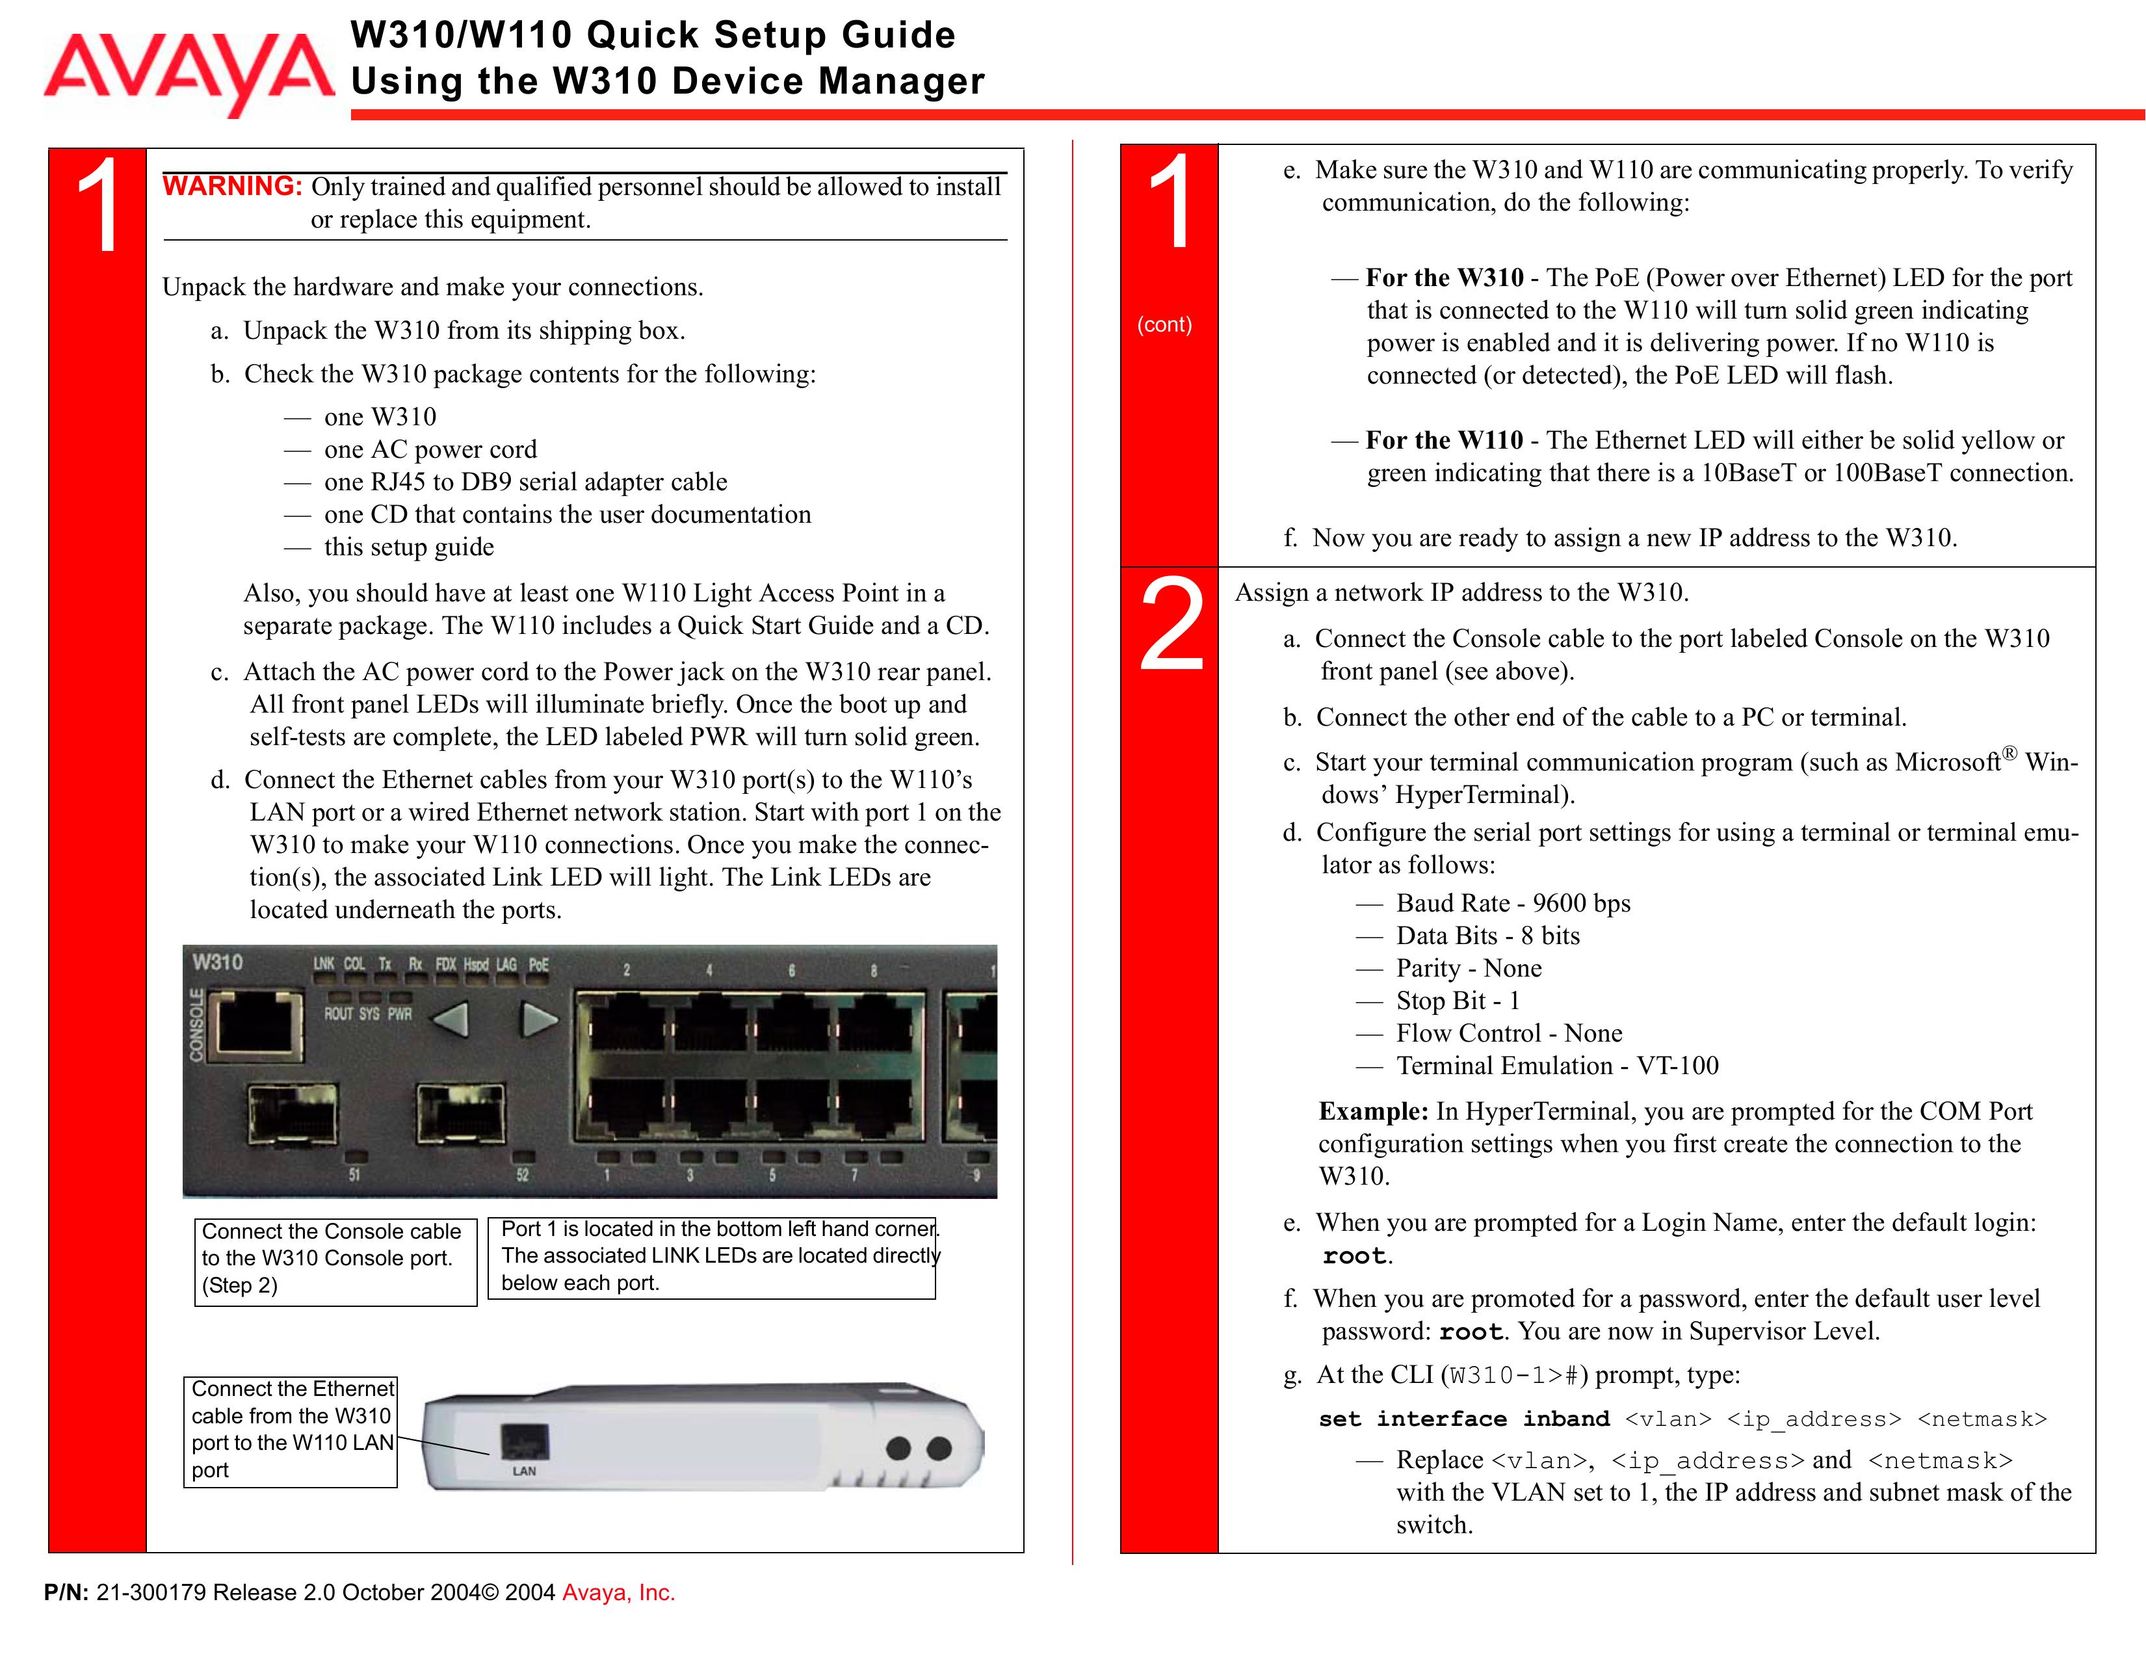 Avaya W110 Network Card User Manual